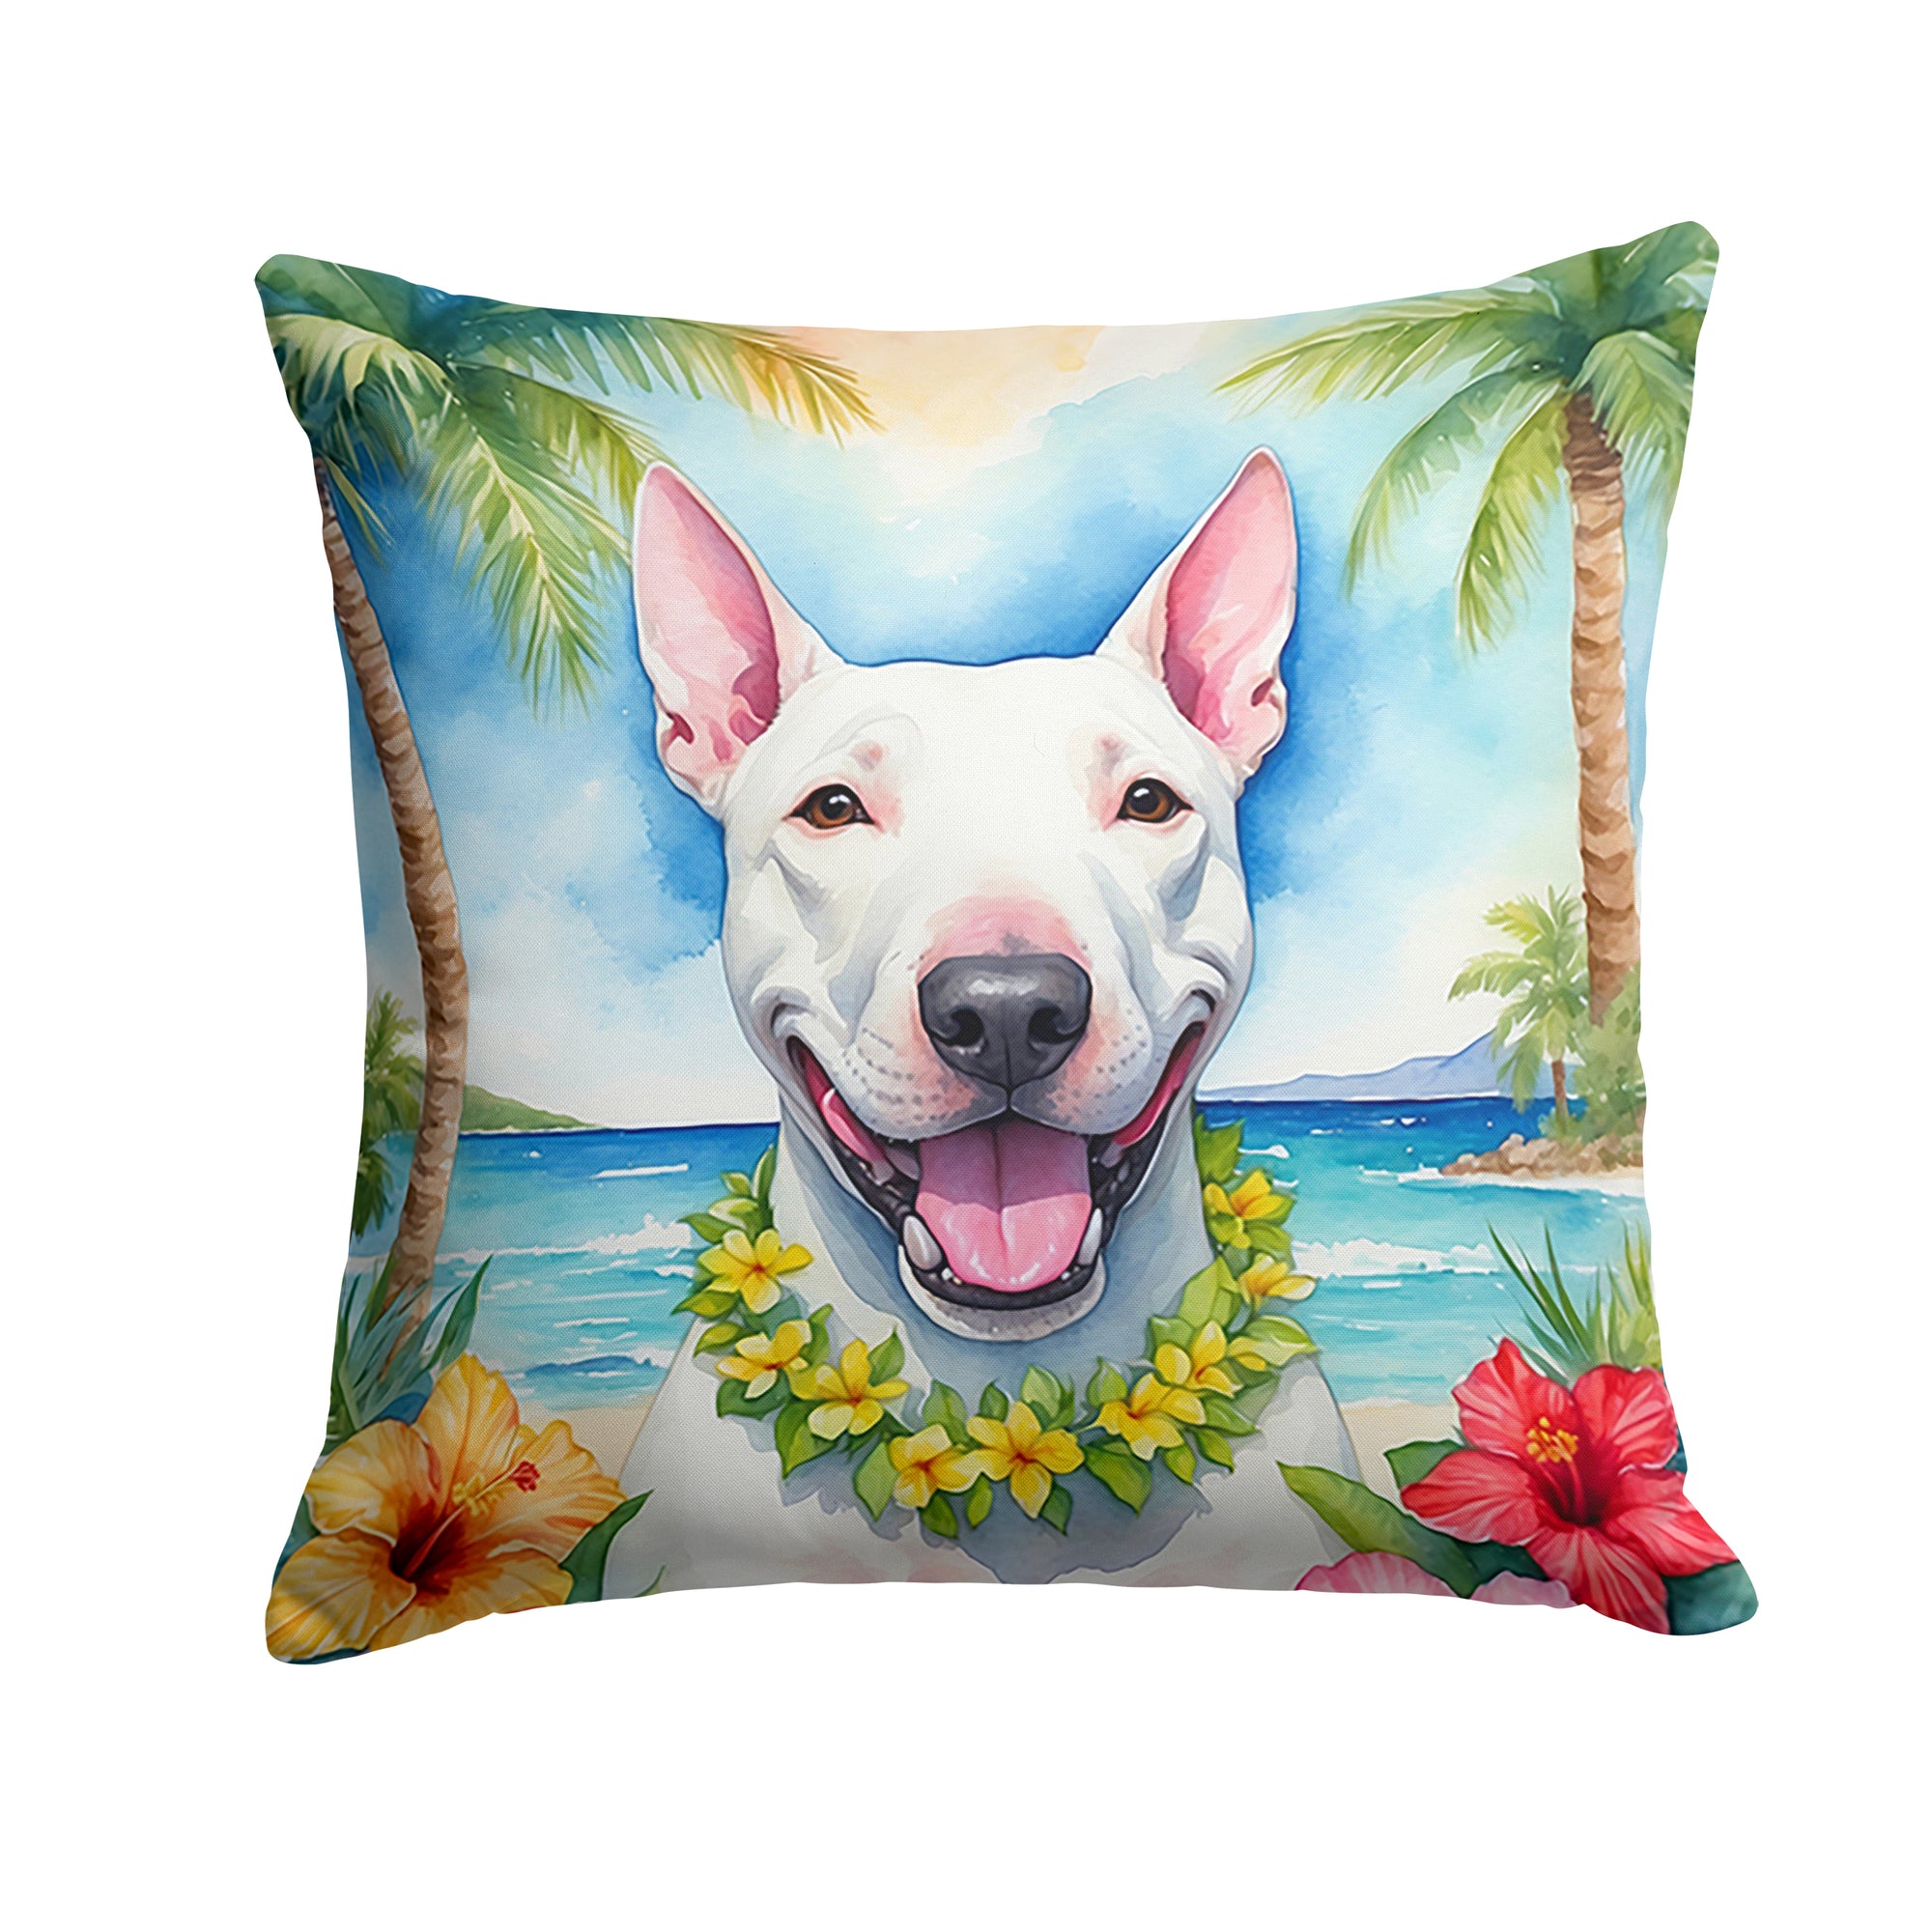 Buy this Bull Terrier Luau Throw Pillow